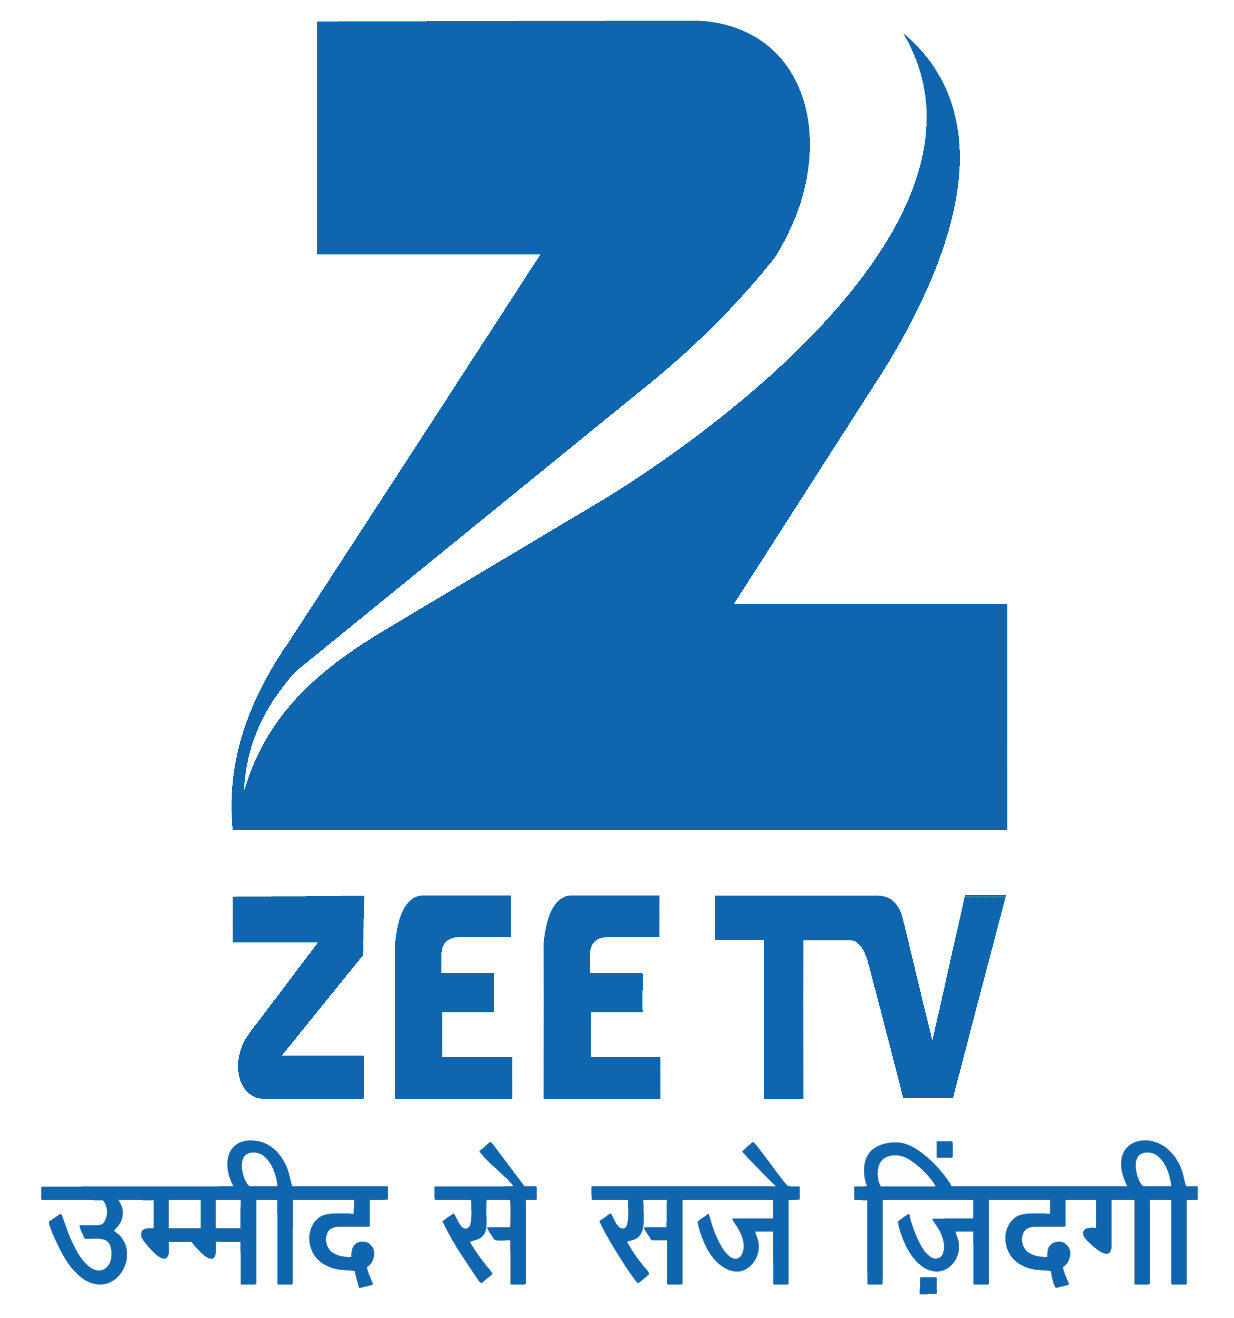 Zee TV logo, logotype